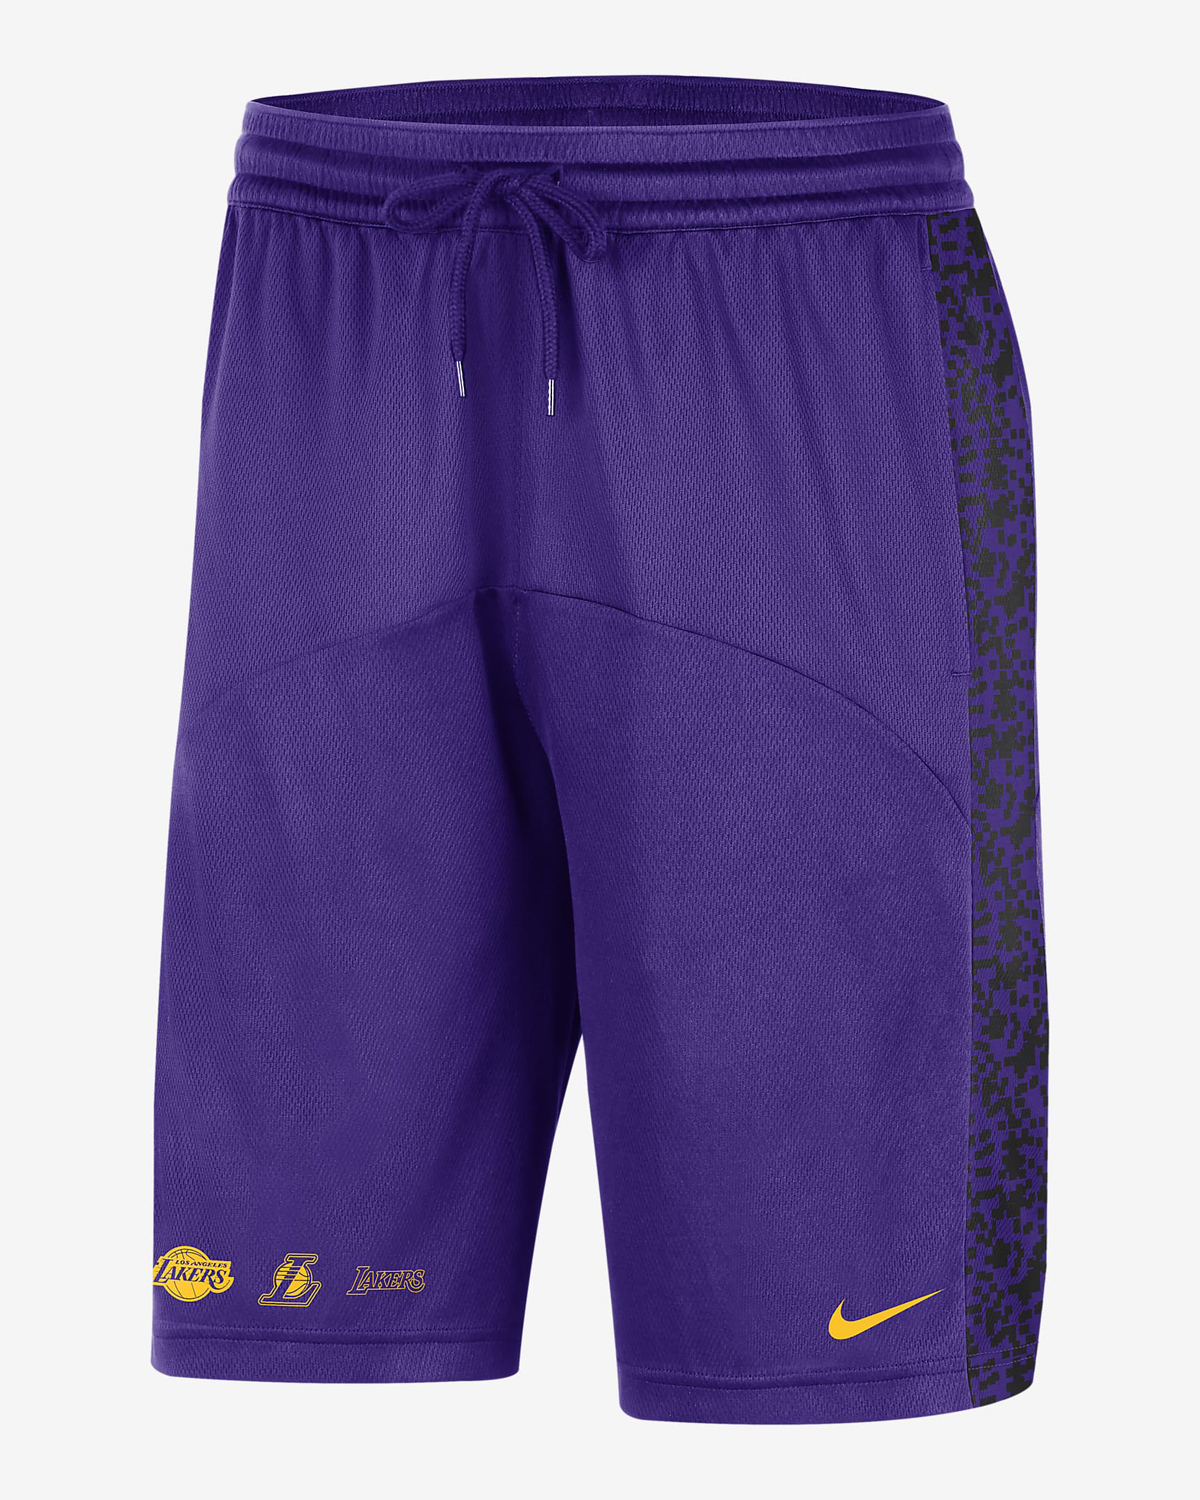 Nike-Lakers-Starting-5-Courtside-Shorts